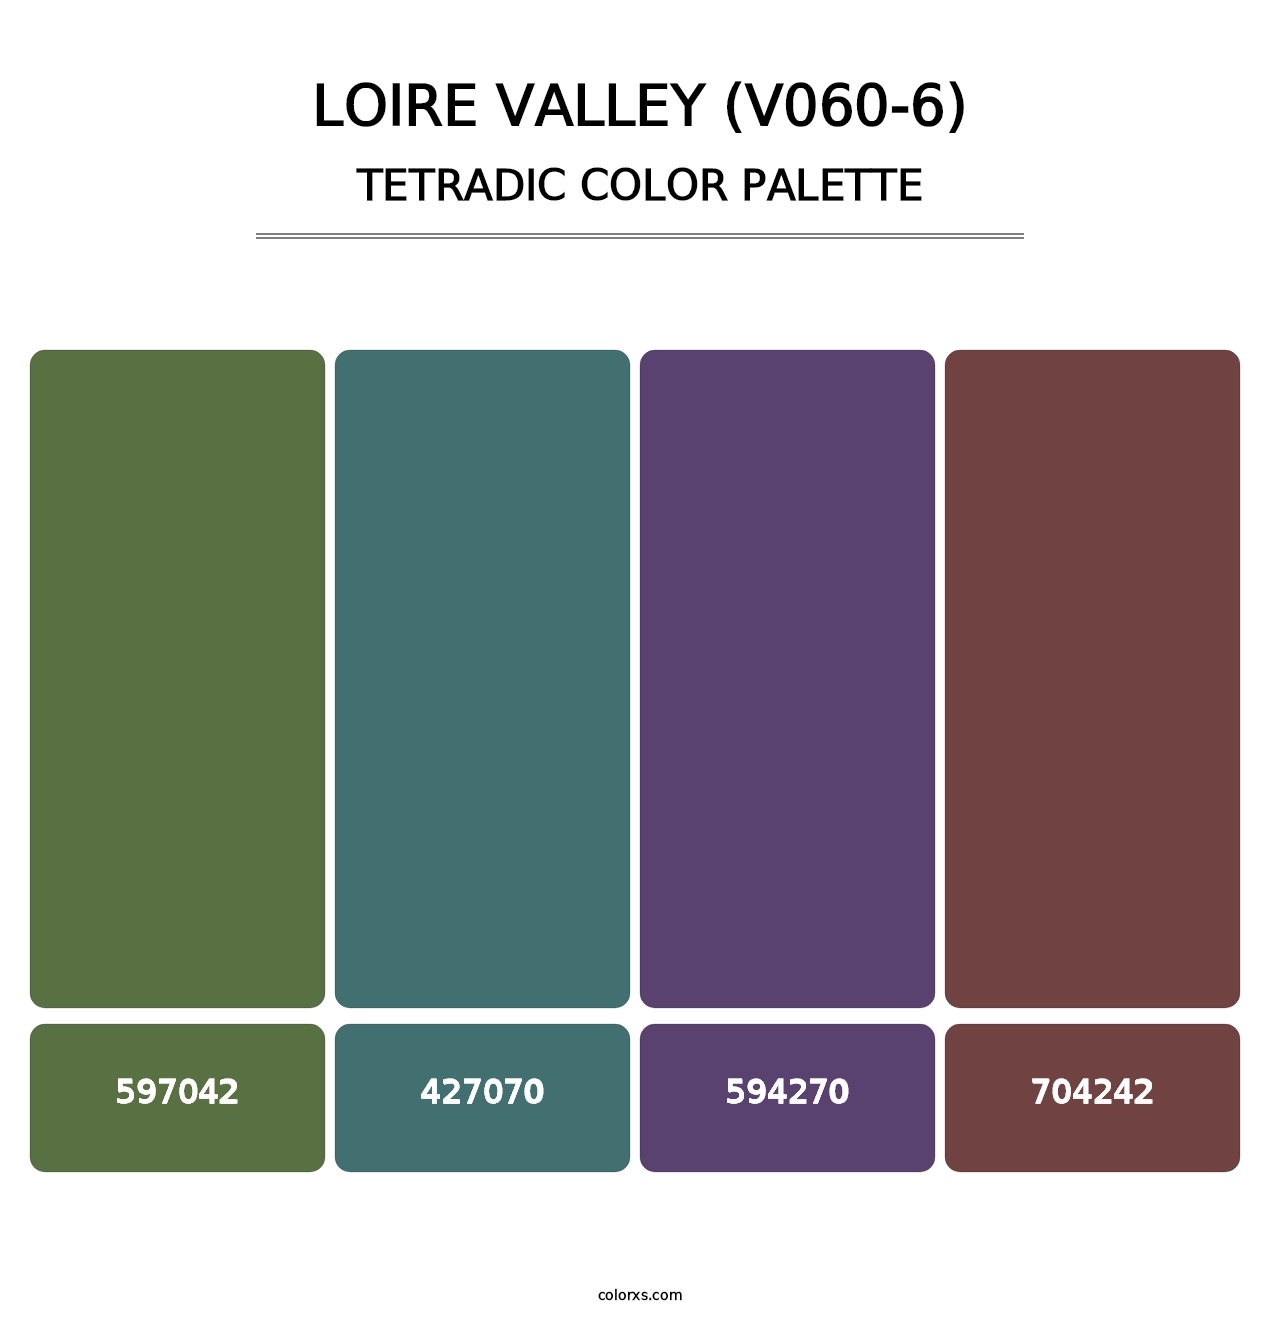 Loire Valley (V060-6) - Tetradic Color Palette